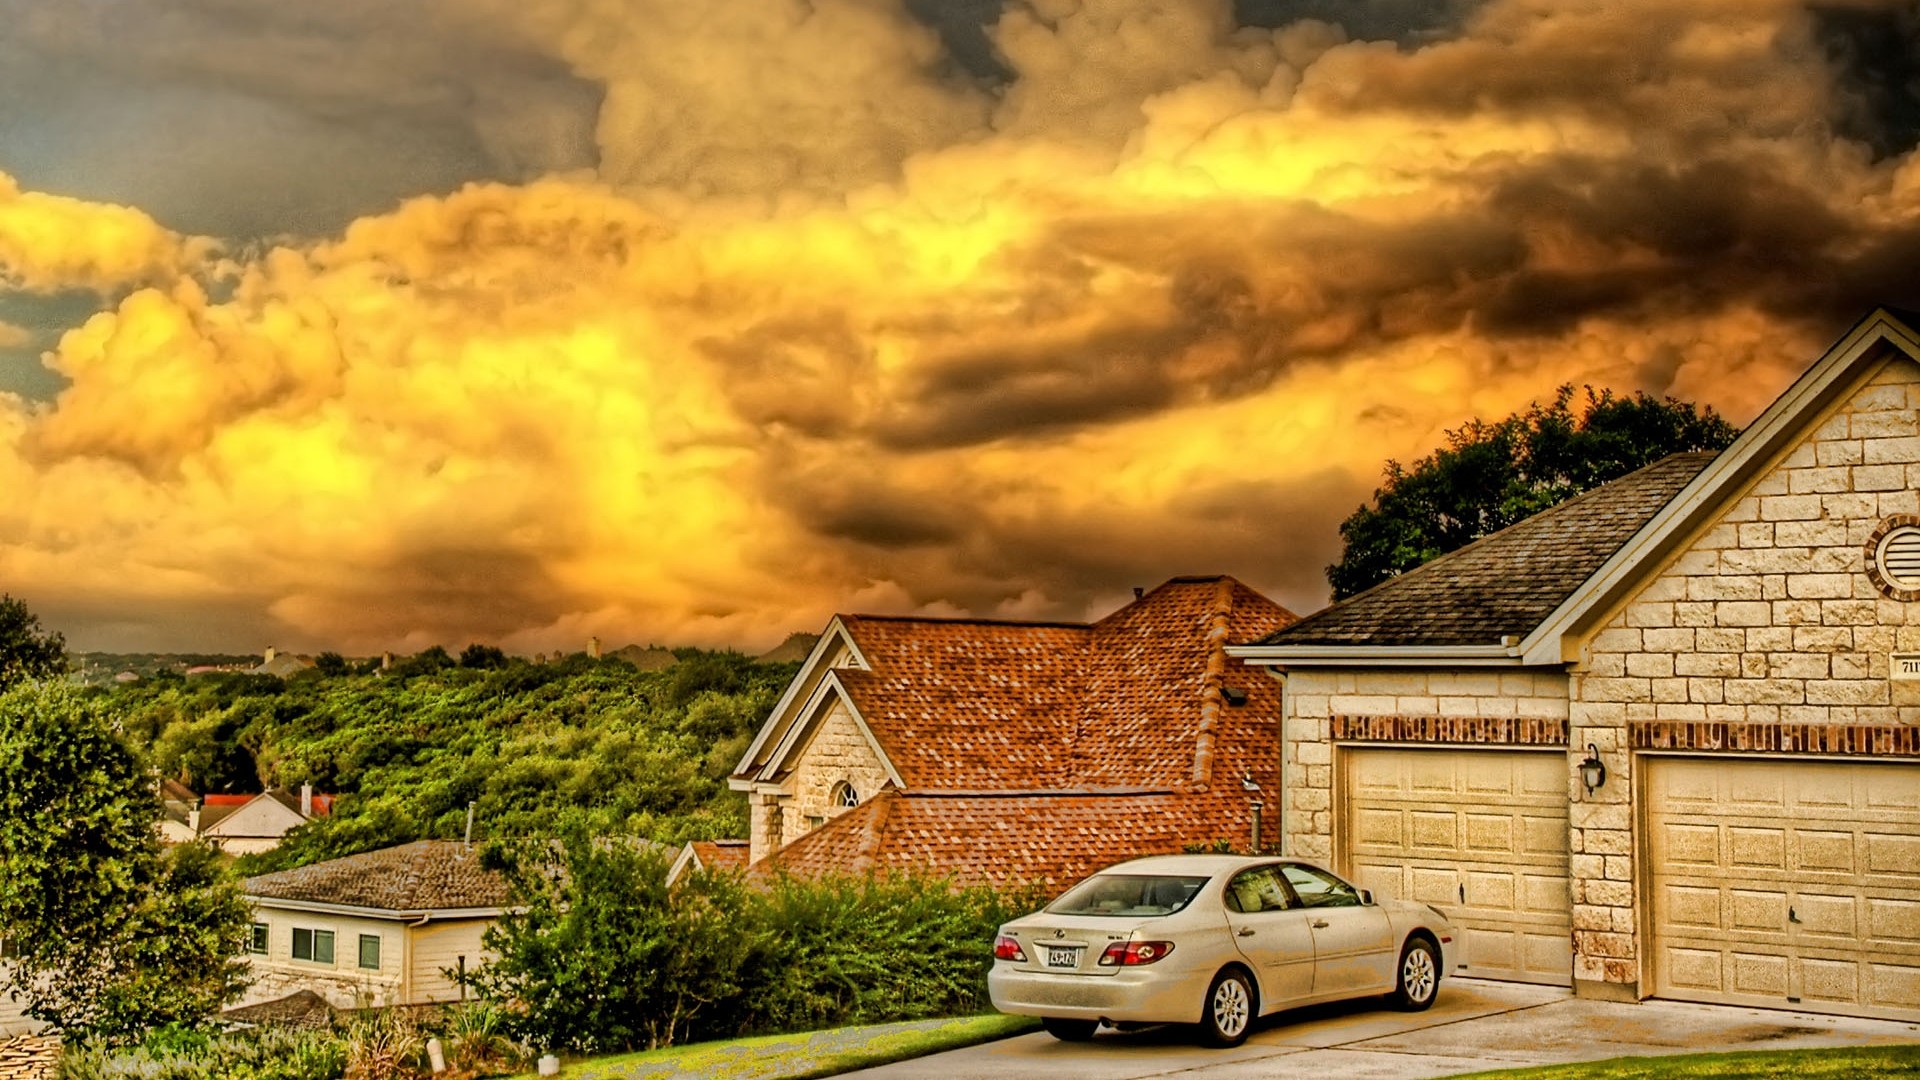 clouds, cityscapes, cars, Lexus, HDR photography, house, suburbs - desktop wallpaper